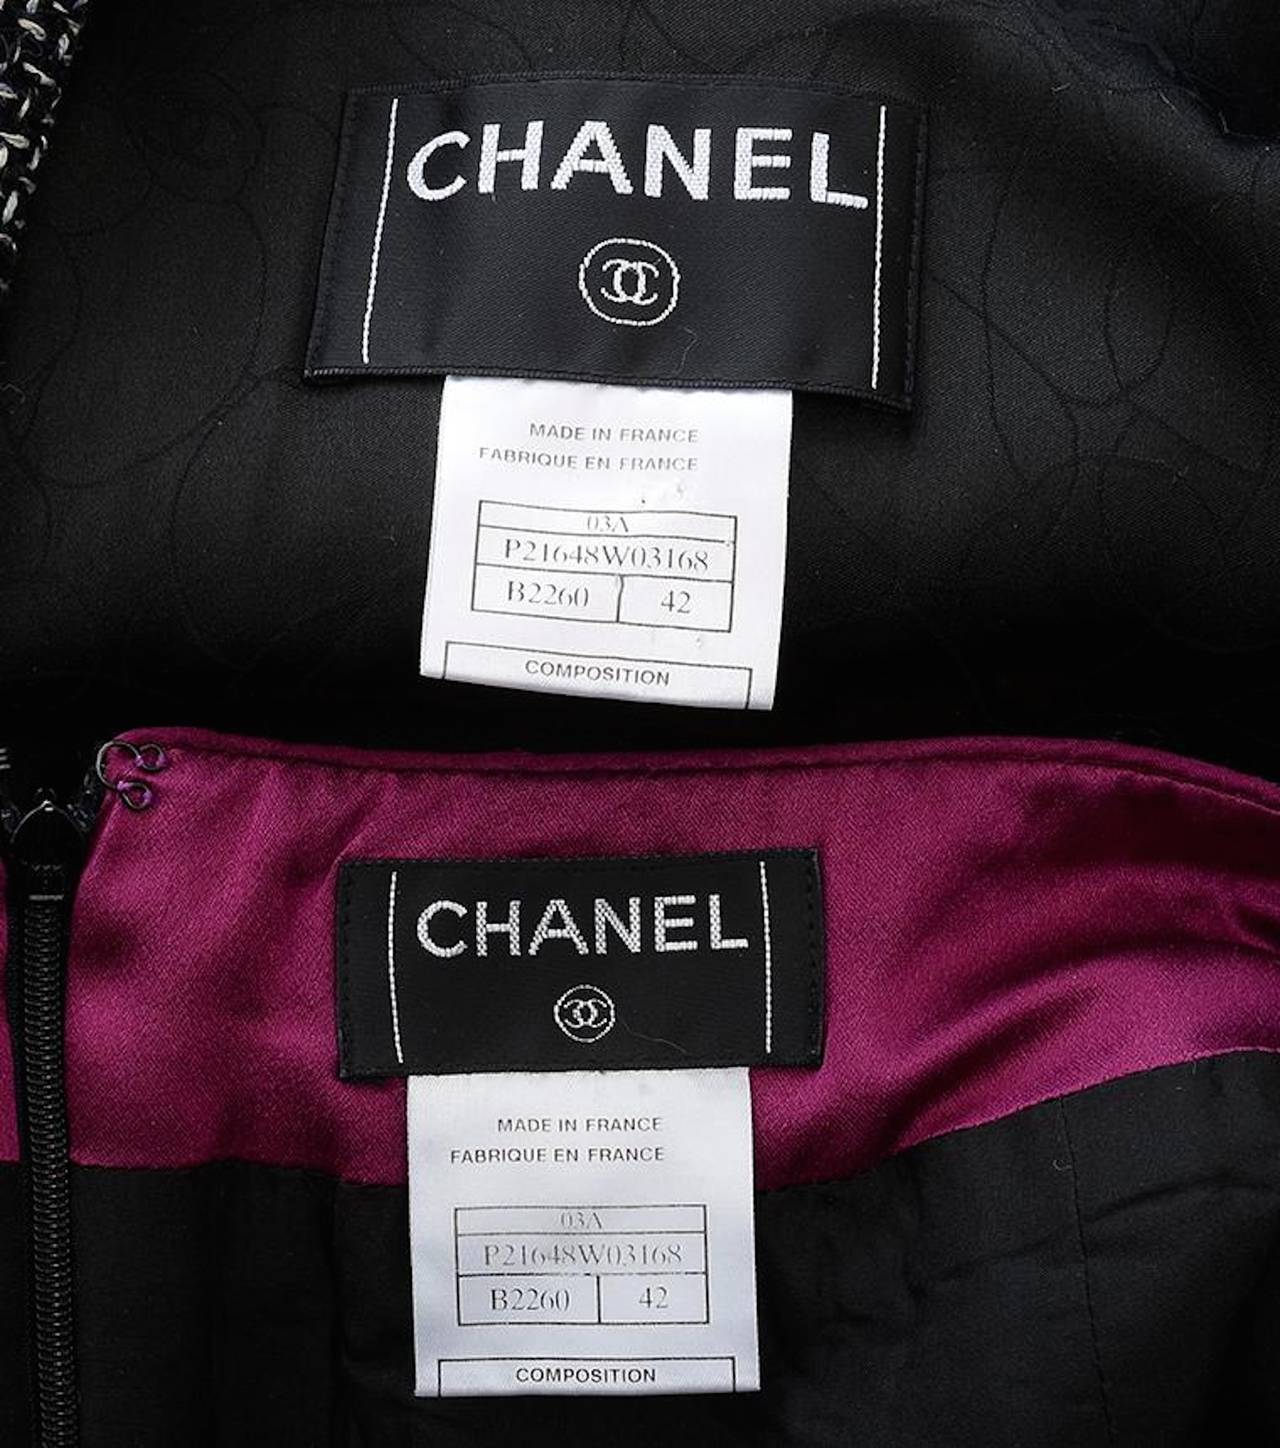 Chanel 03A Black White Magenta Trimmed Skirt Suit Fr 42 US 10 For Sale 1